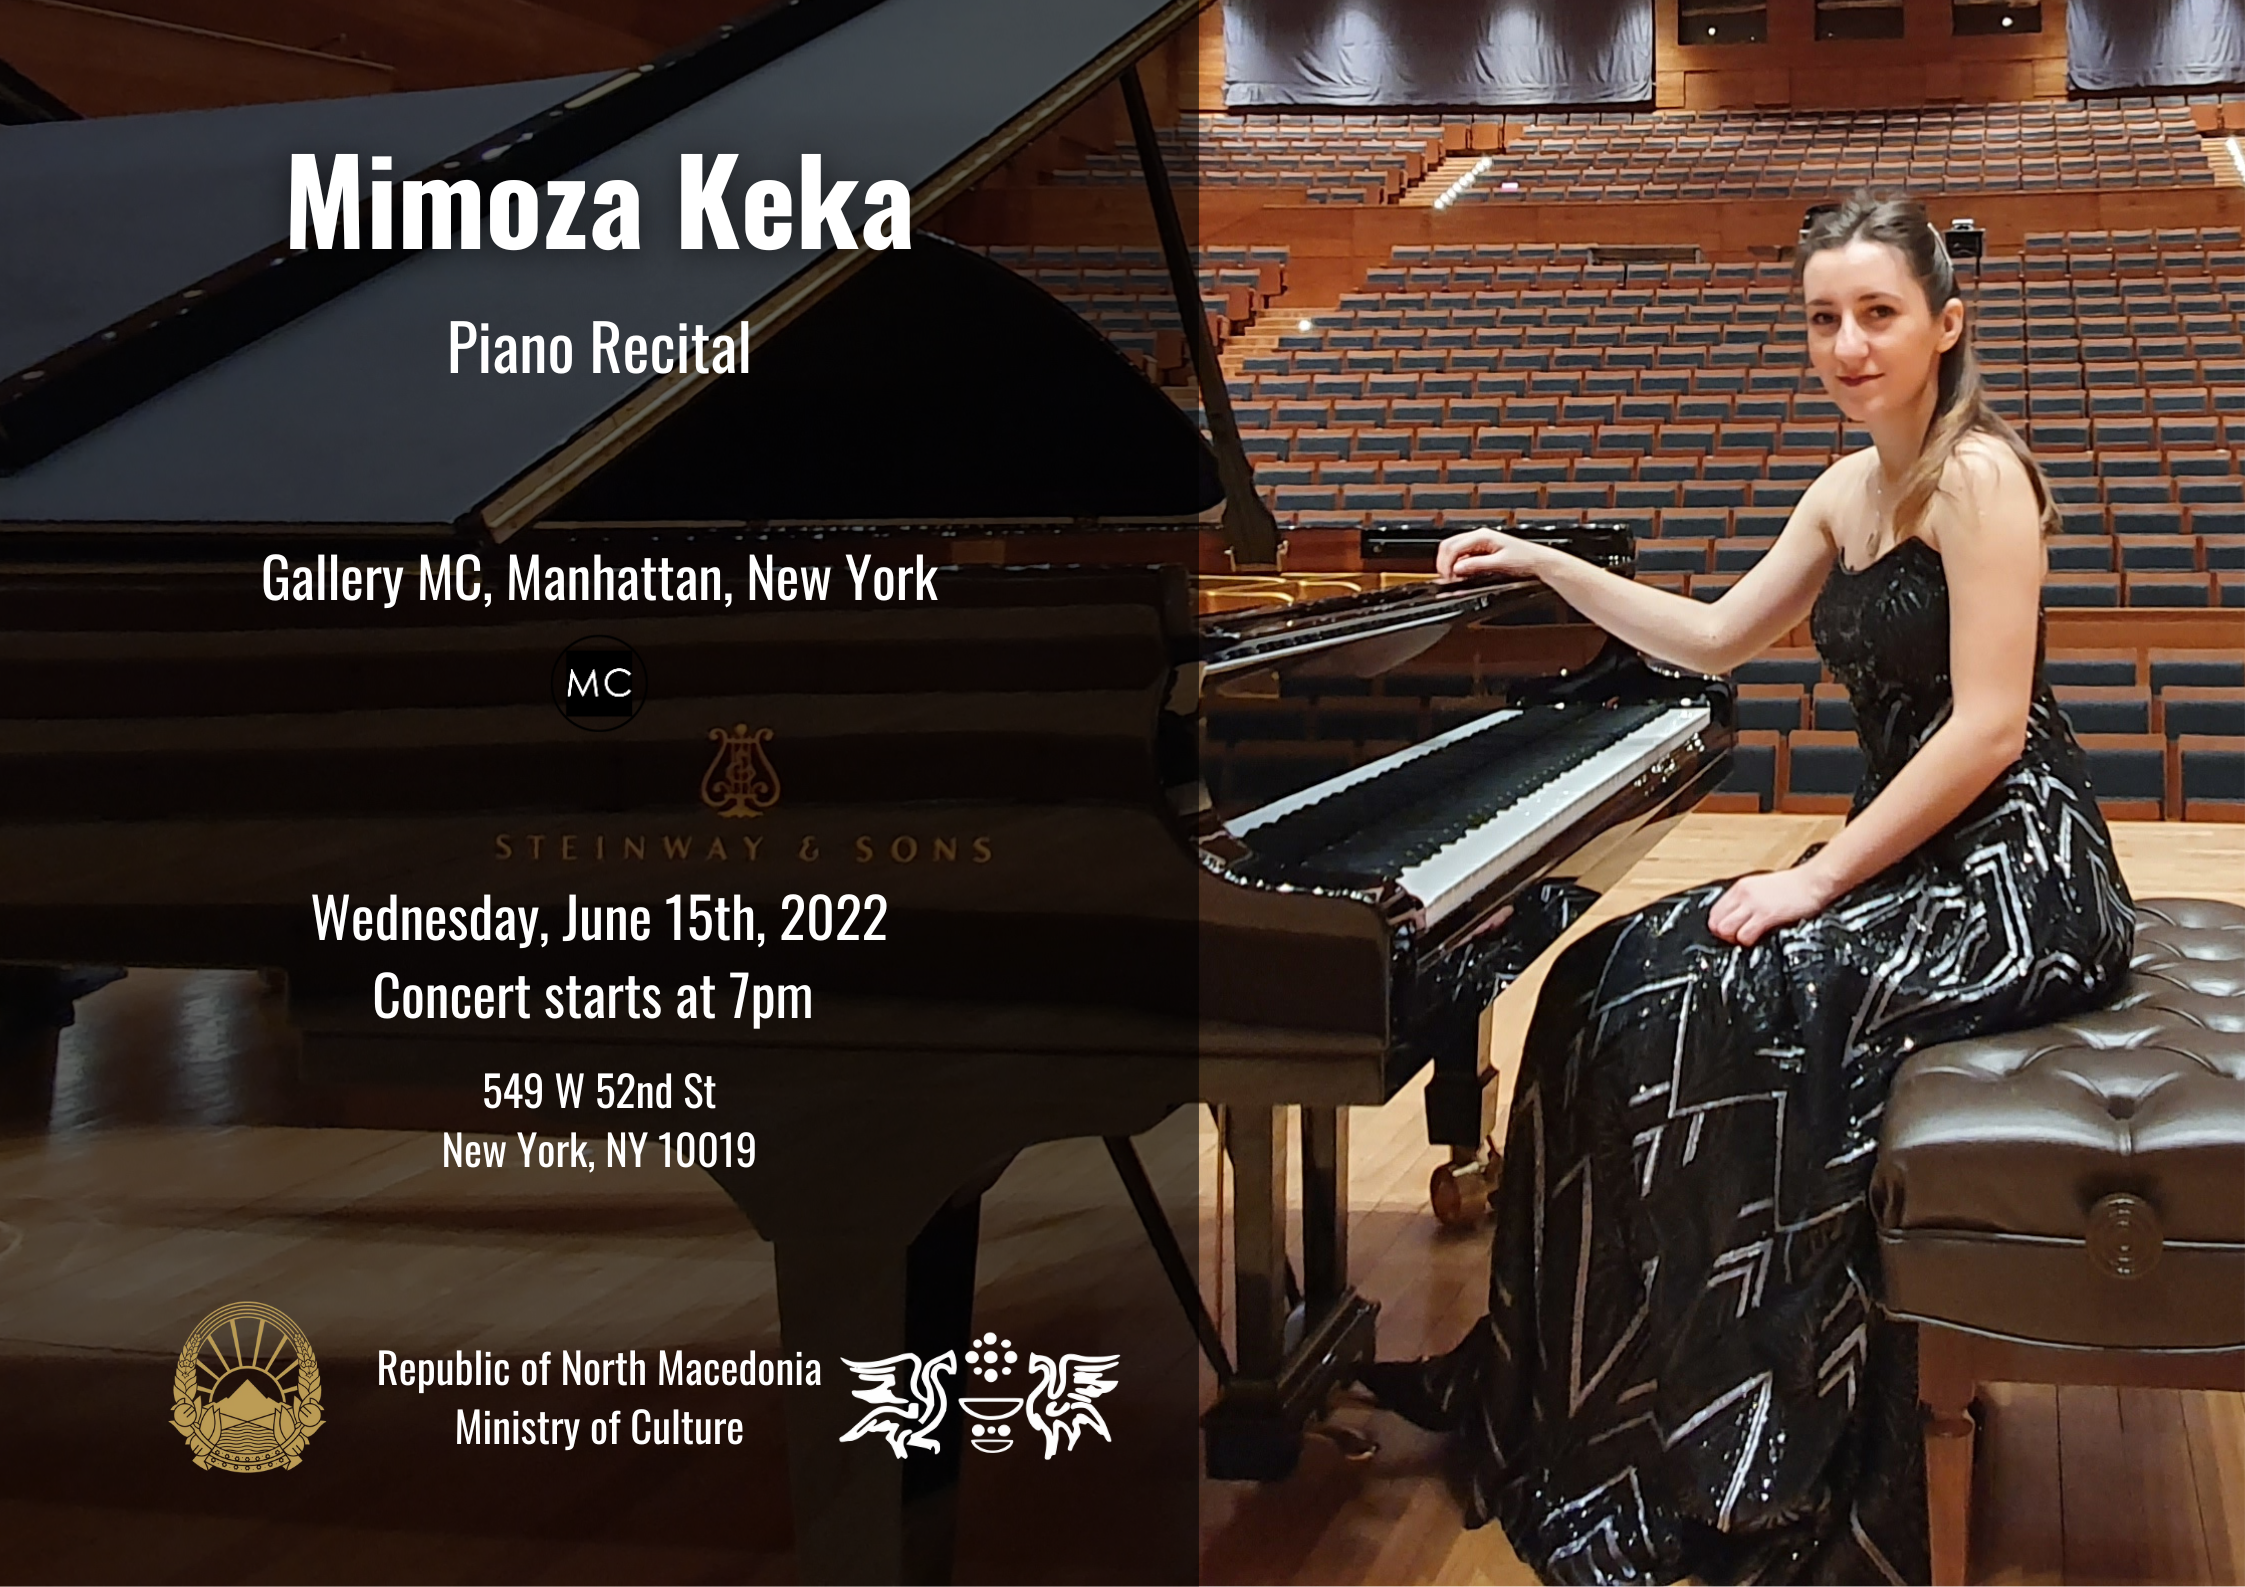 Piano Recital NYC Mimoza Keka